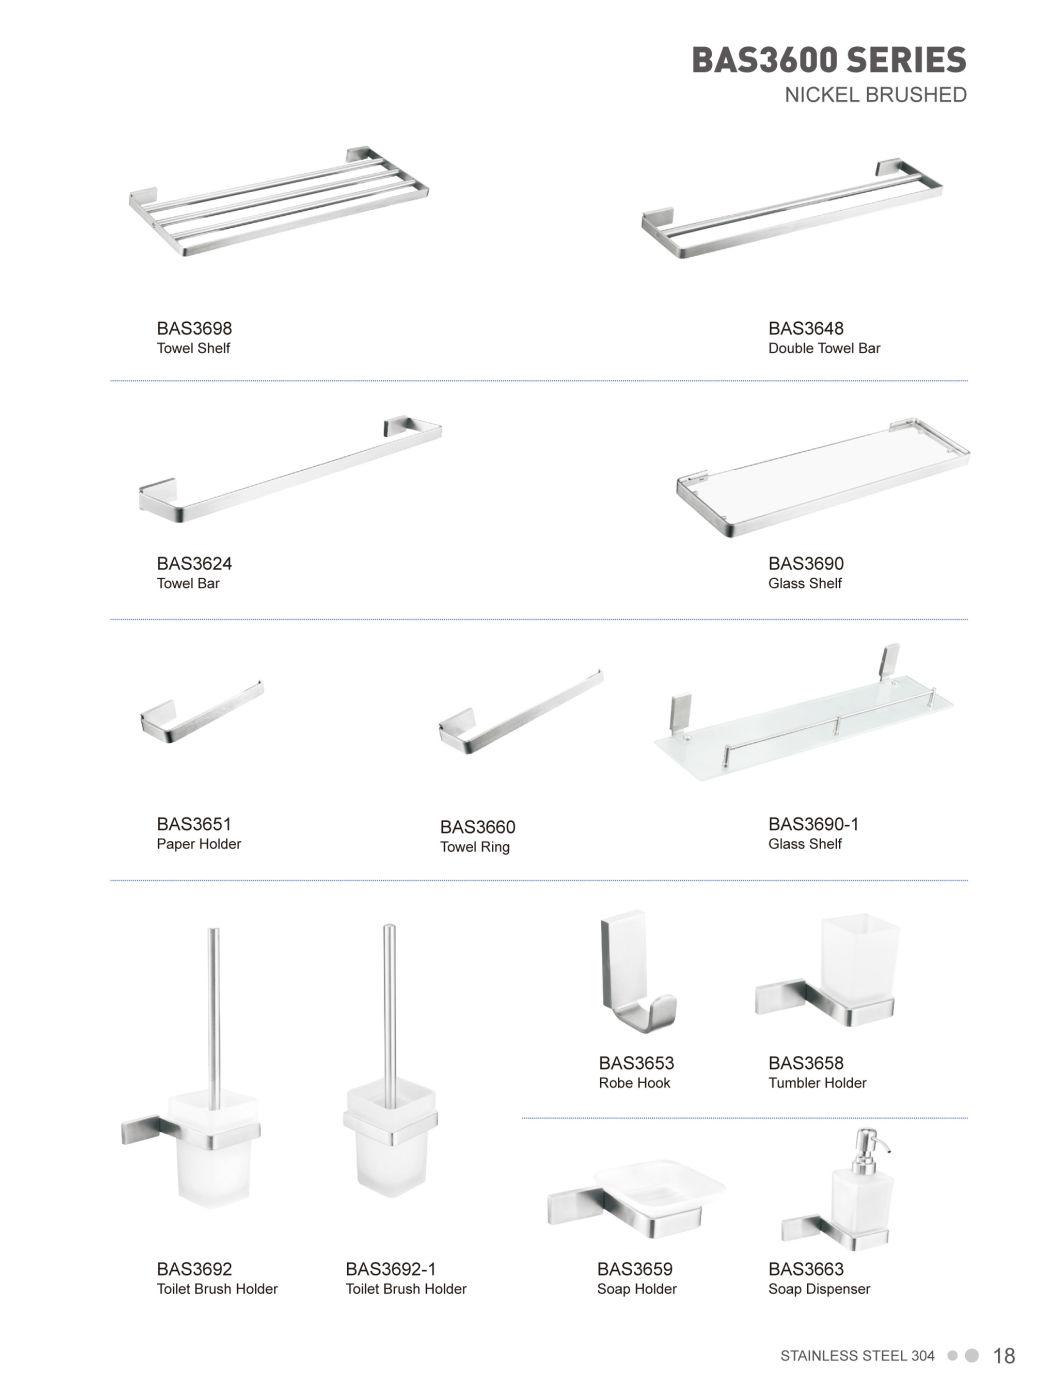 Stainless Steel 304 Bathroom Accessories Ncikel Brushed Glass Shelf (BAS3690)